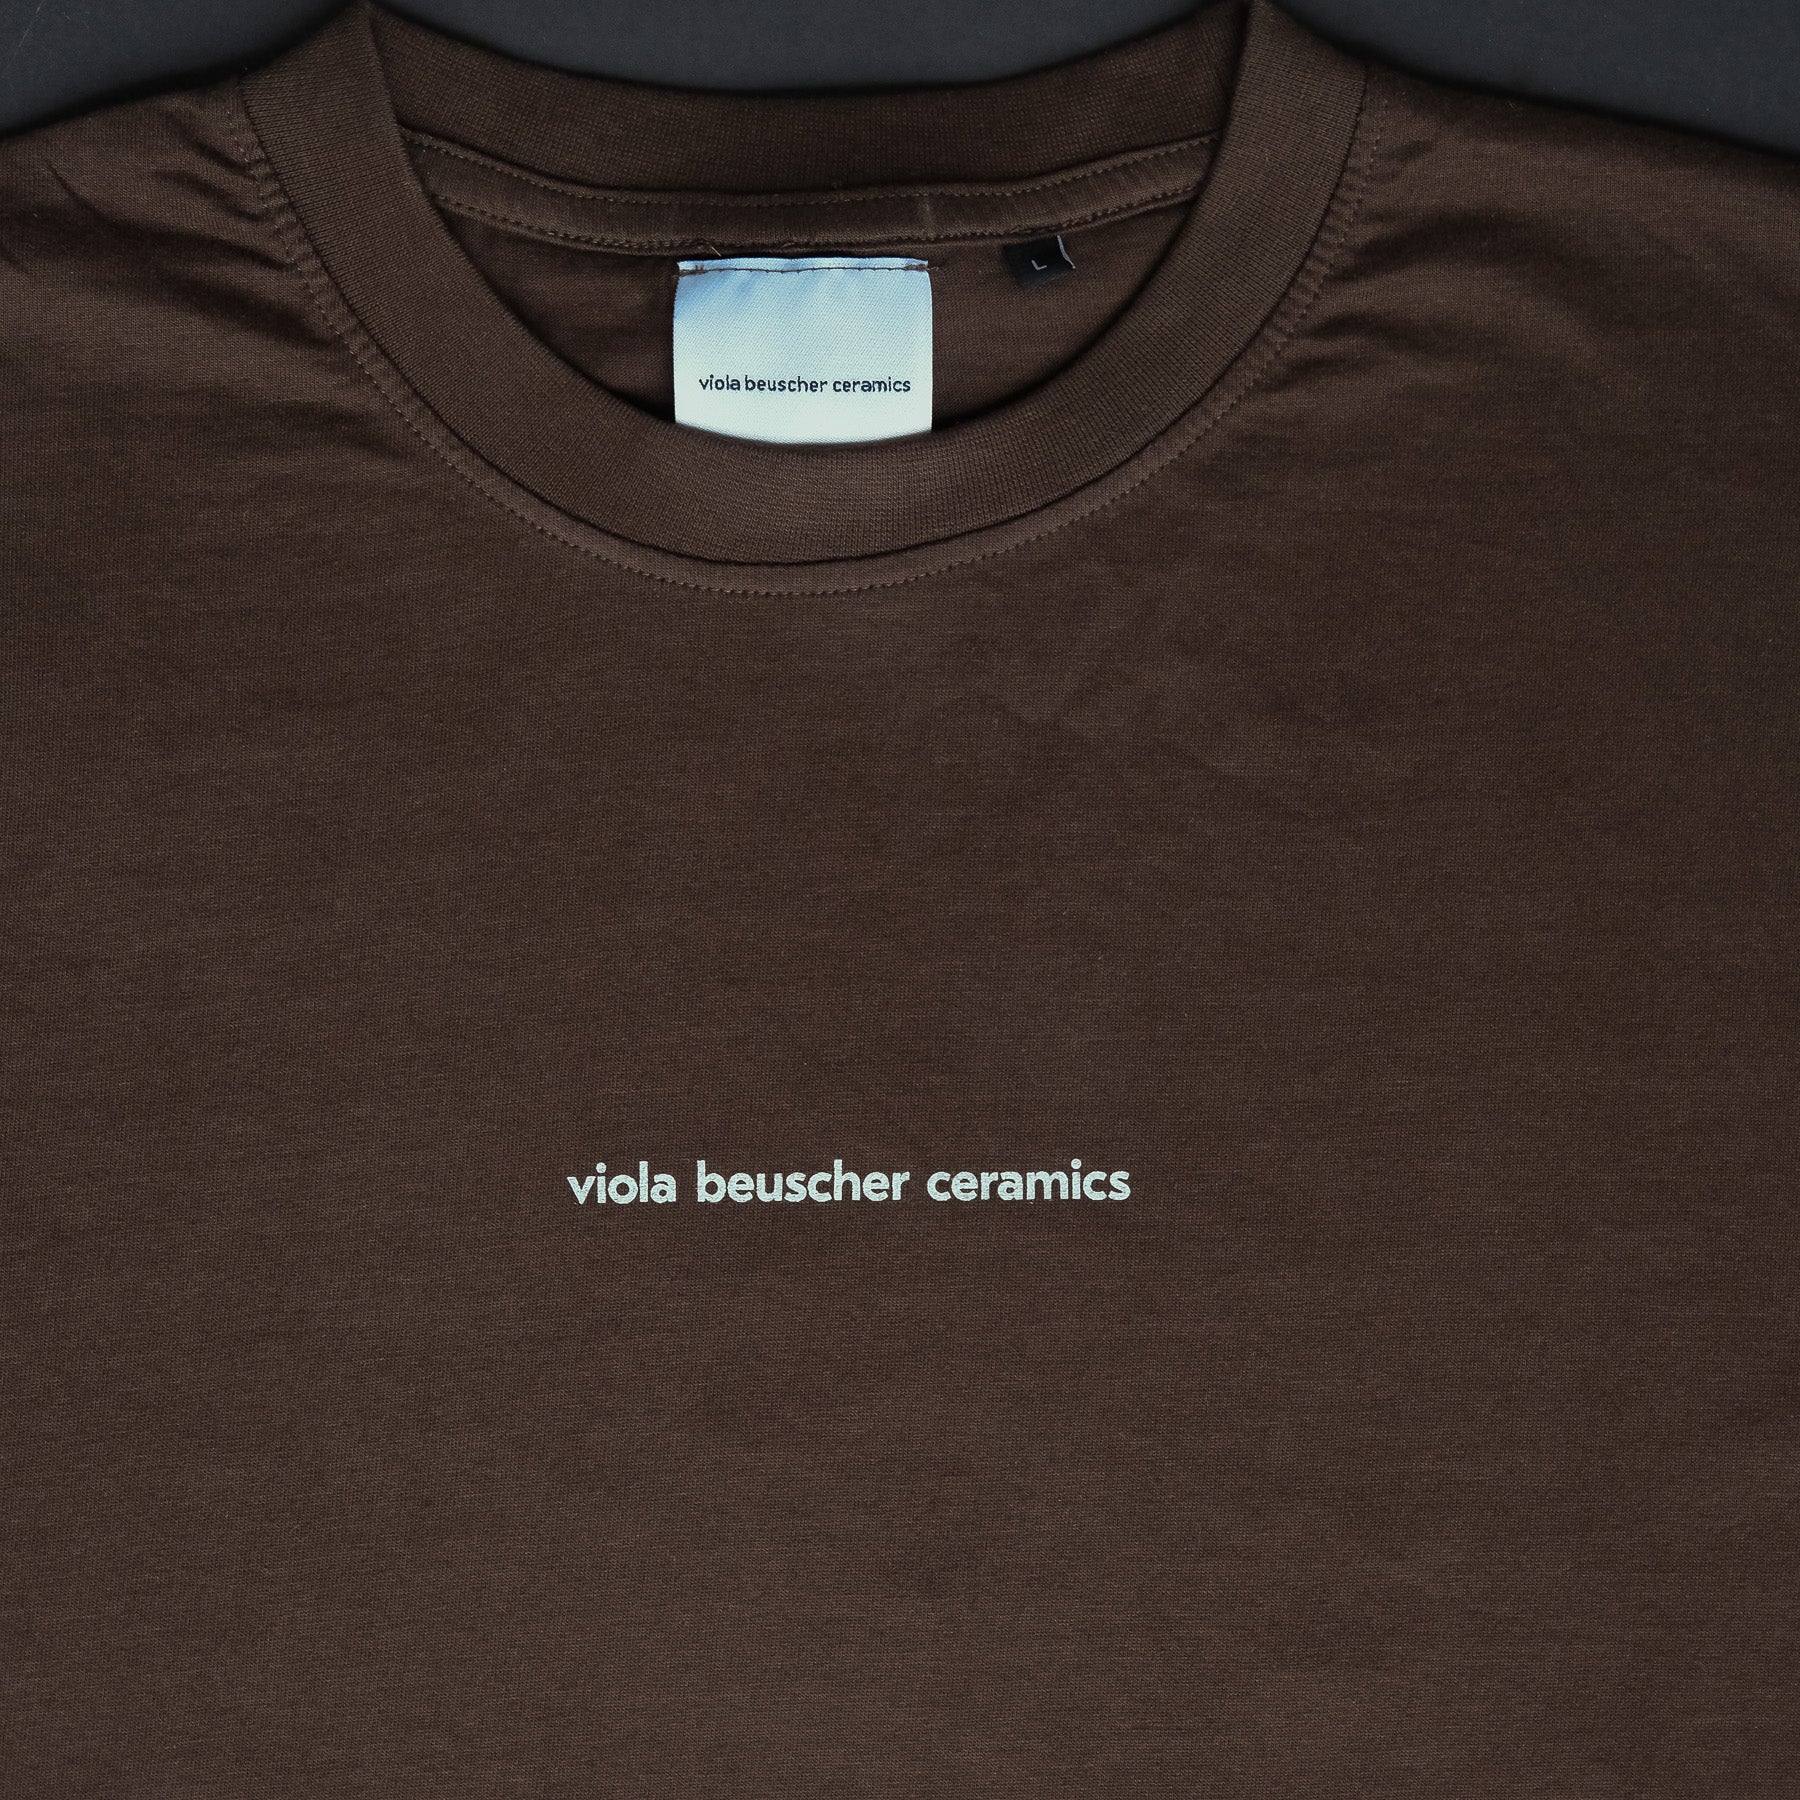 vbc Team Shirt Chocolate